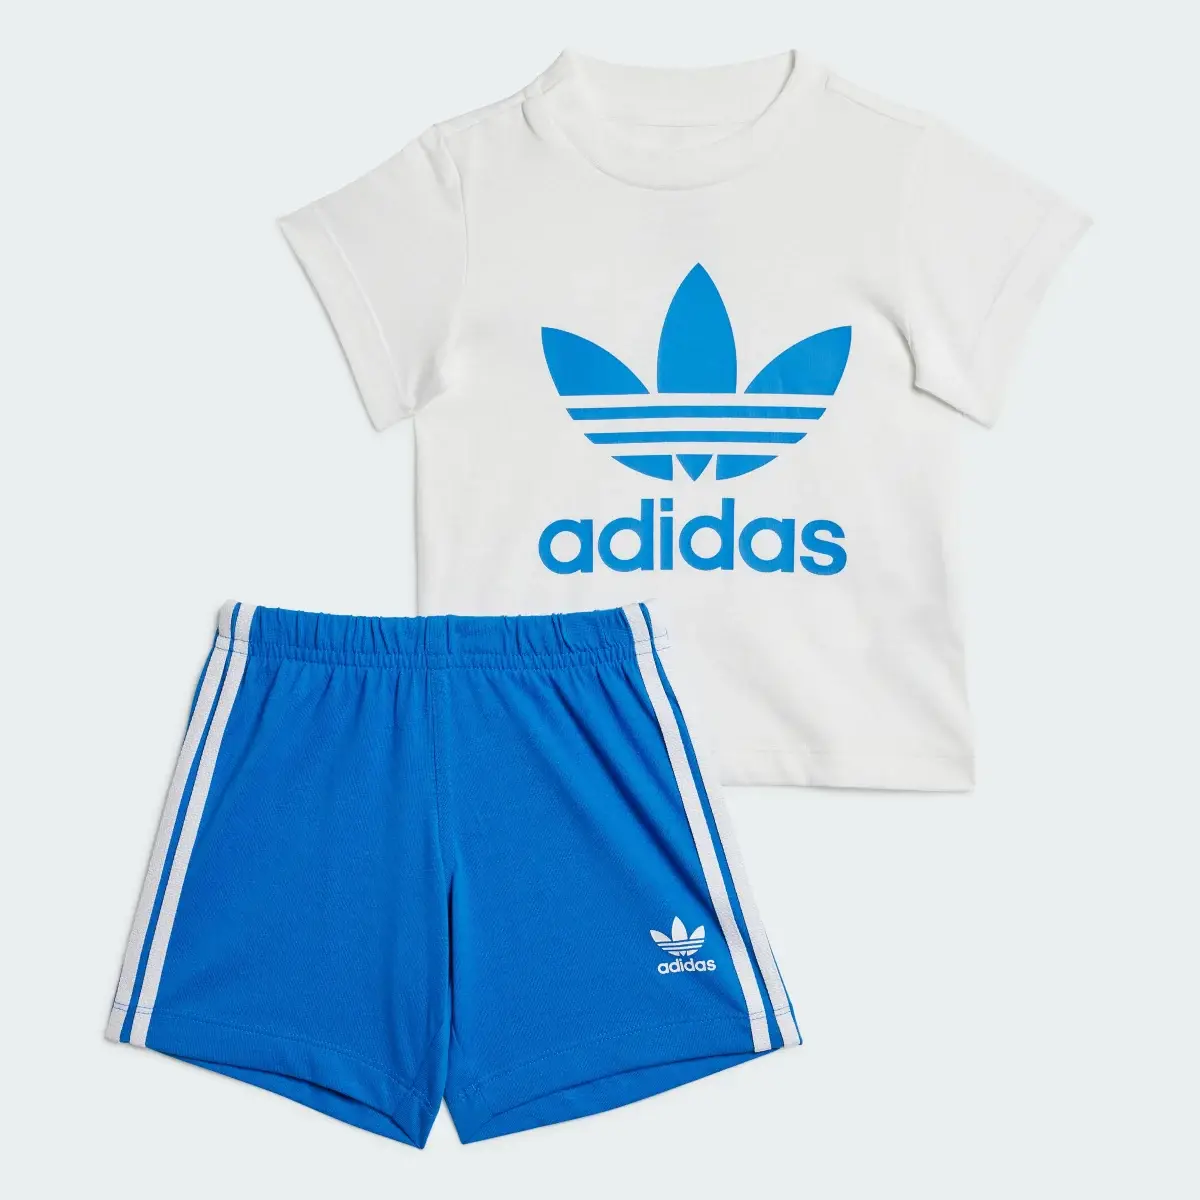 Adidas Adicolor Trefoil Shorts Tee Set. 1